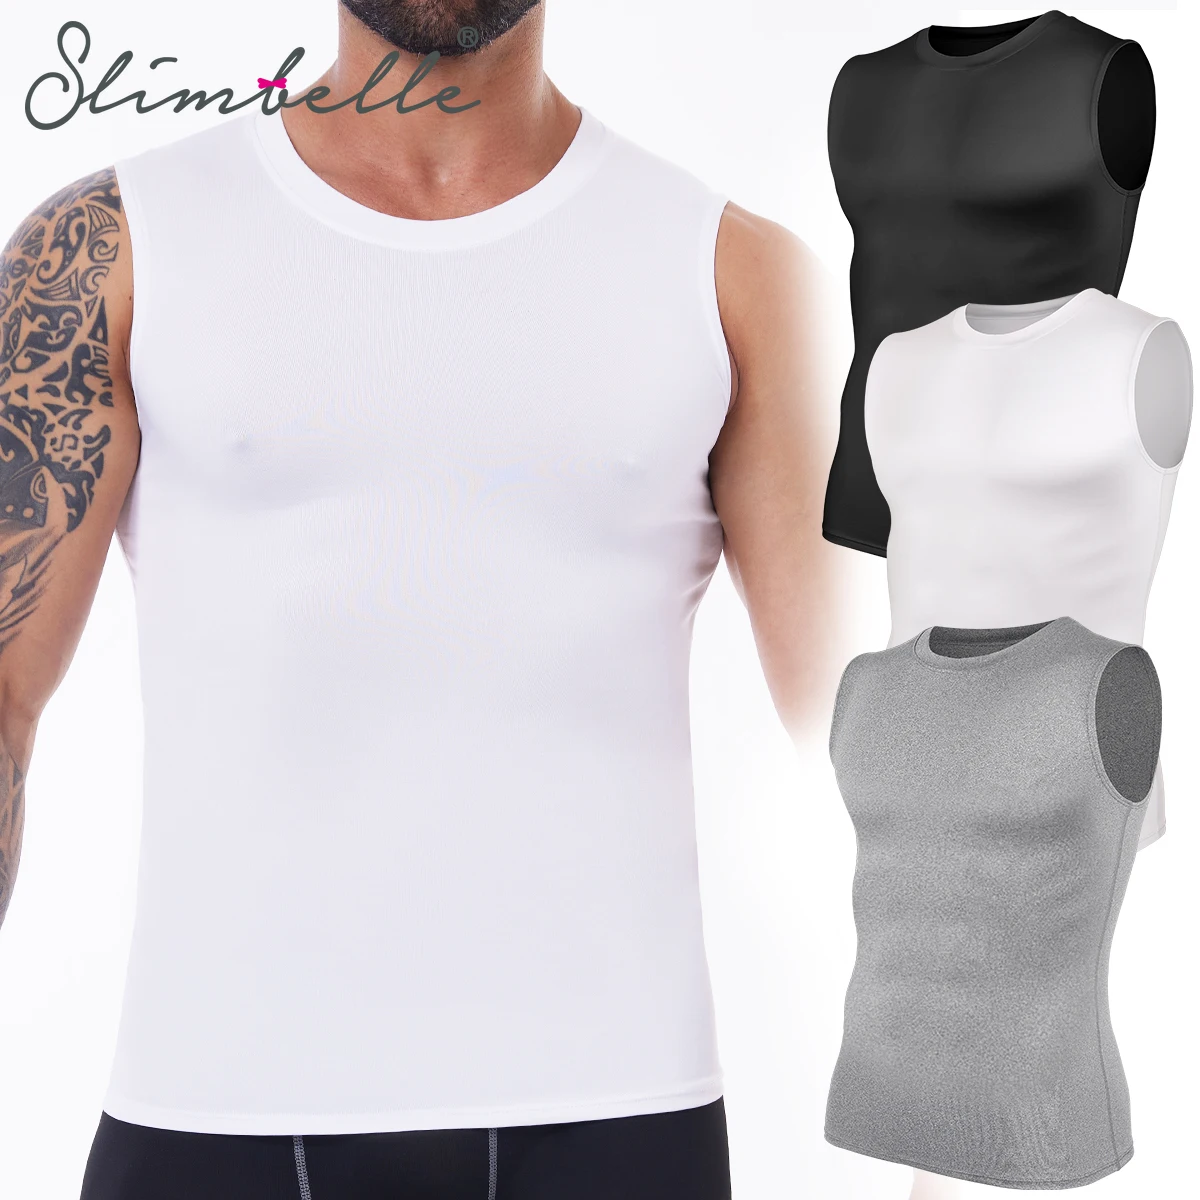 

Men Body Shaper Vest Compression Shirts Slimming Tummy Control Tight Tank Tops Shapewear Workout Abs Abdomen Chest Undershirt